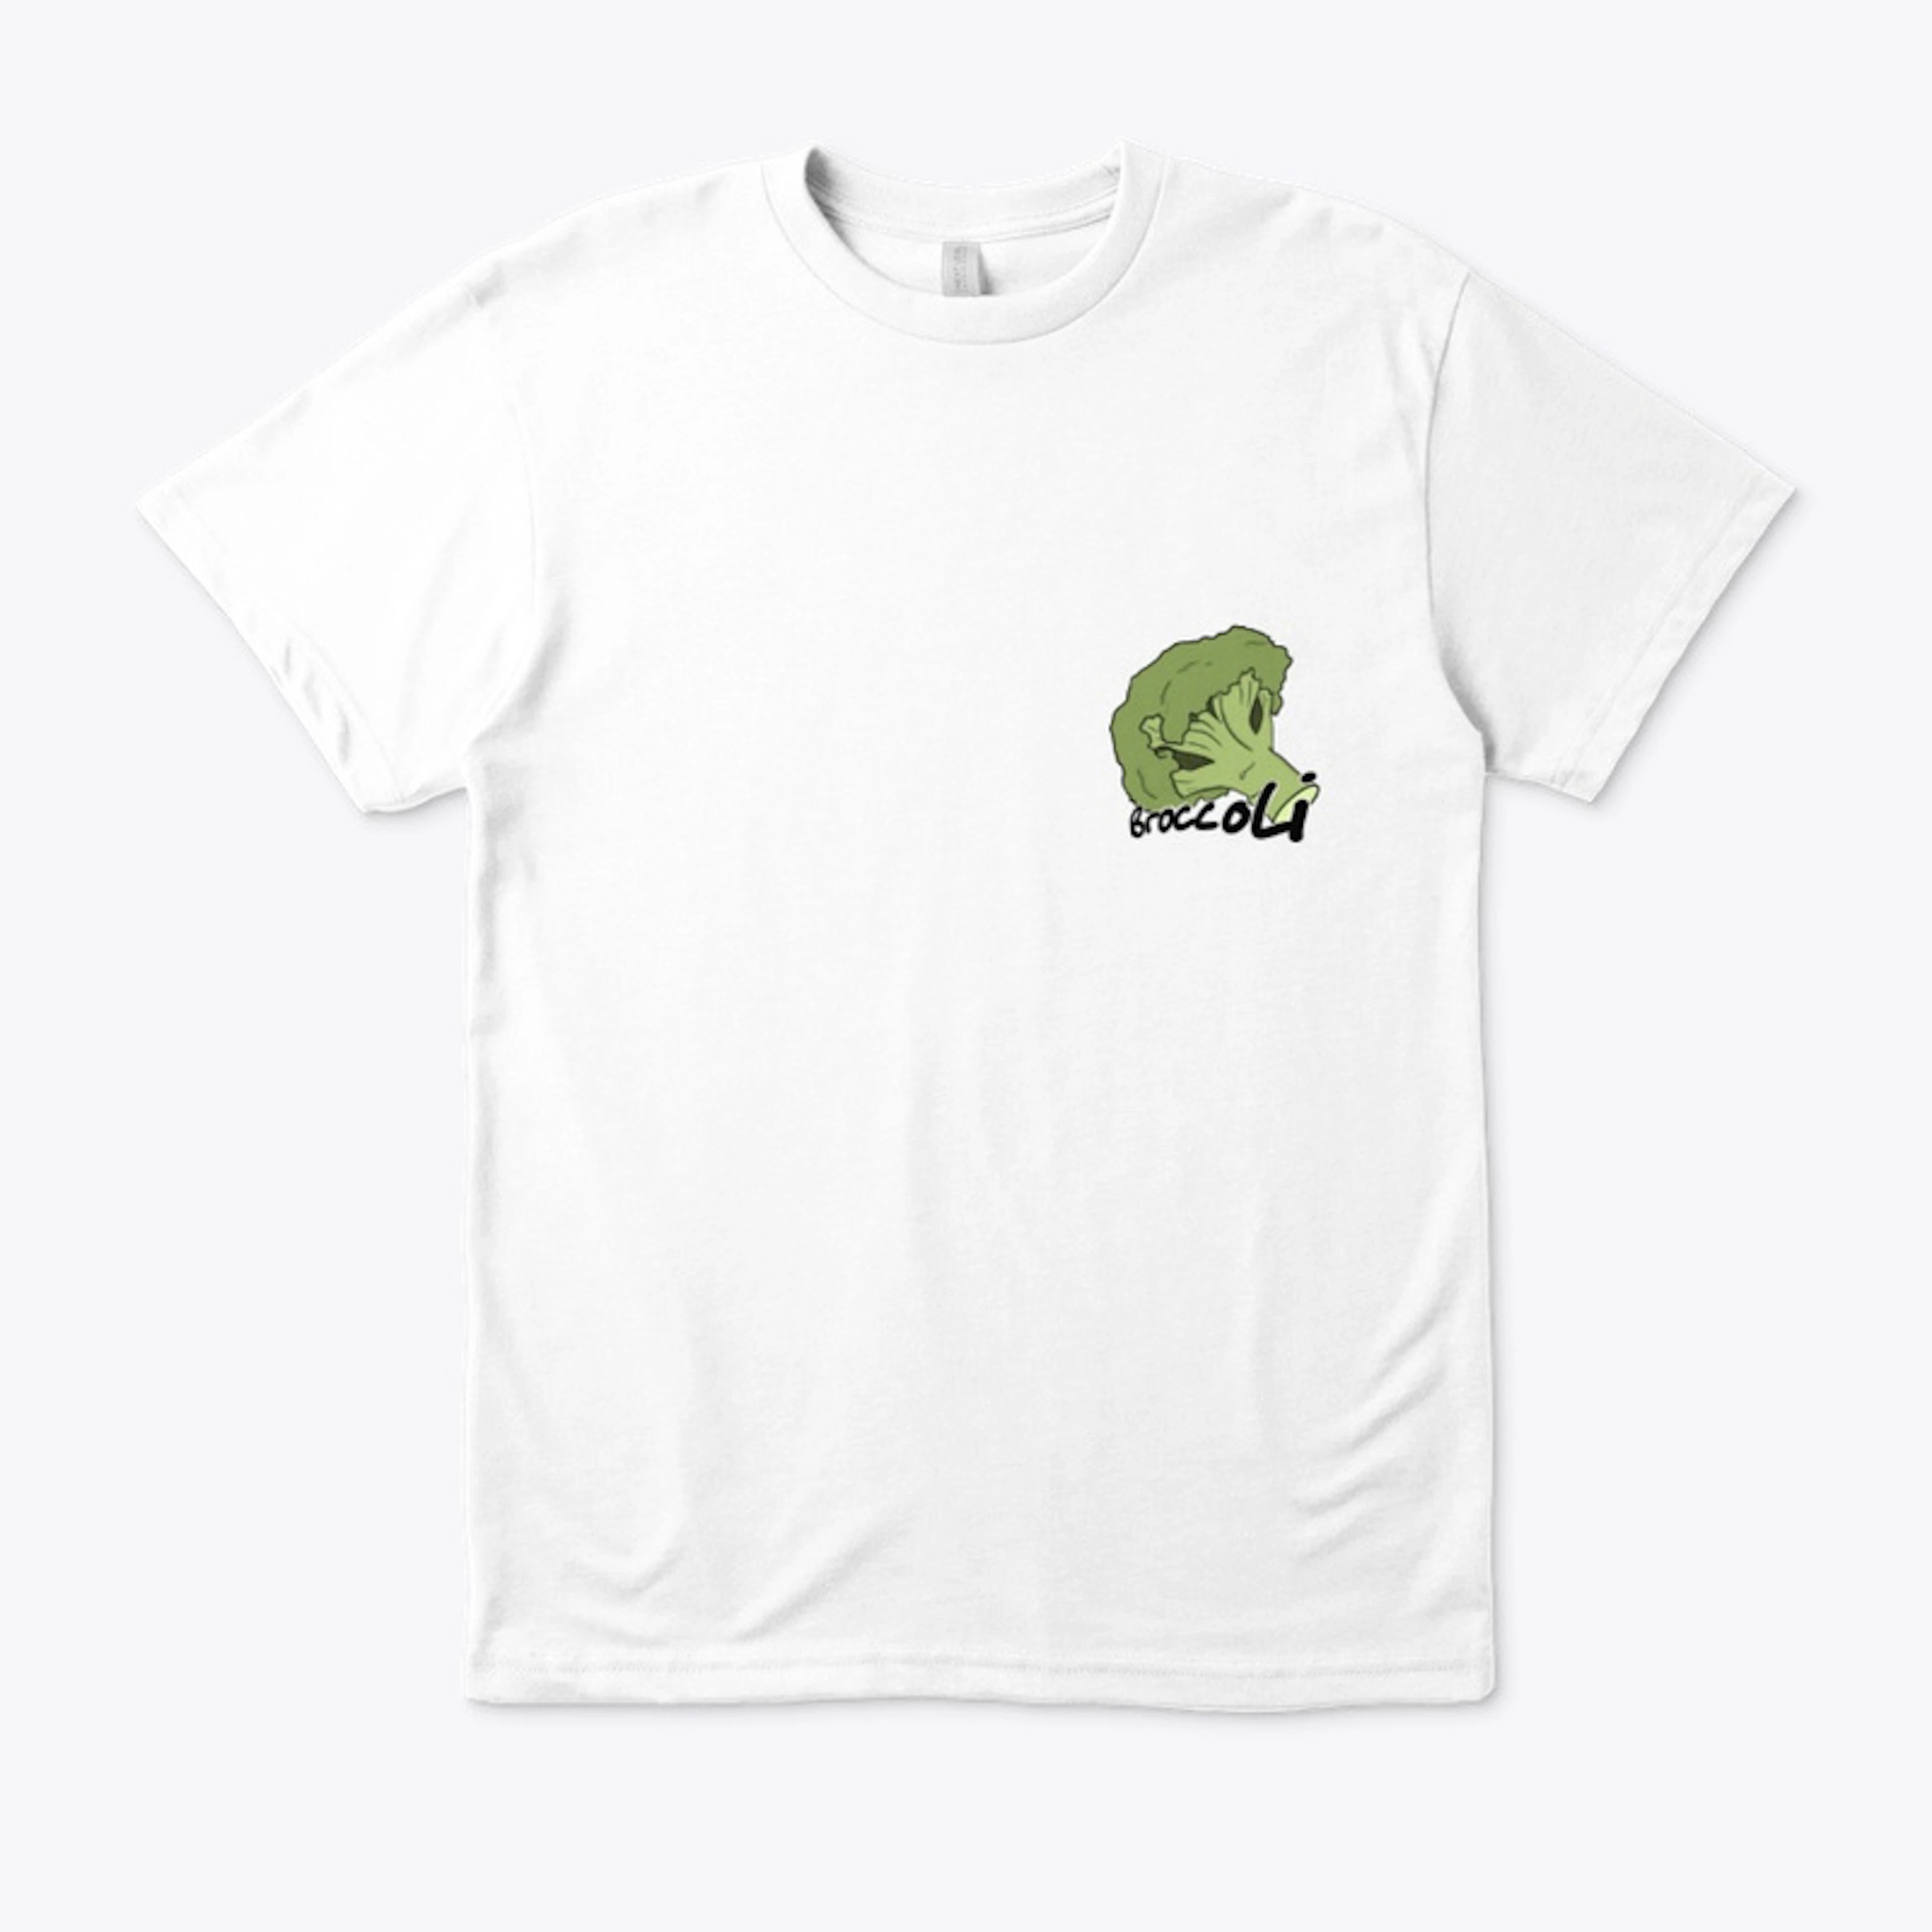 Broccoli shirt